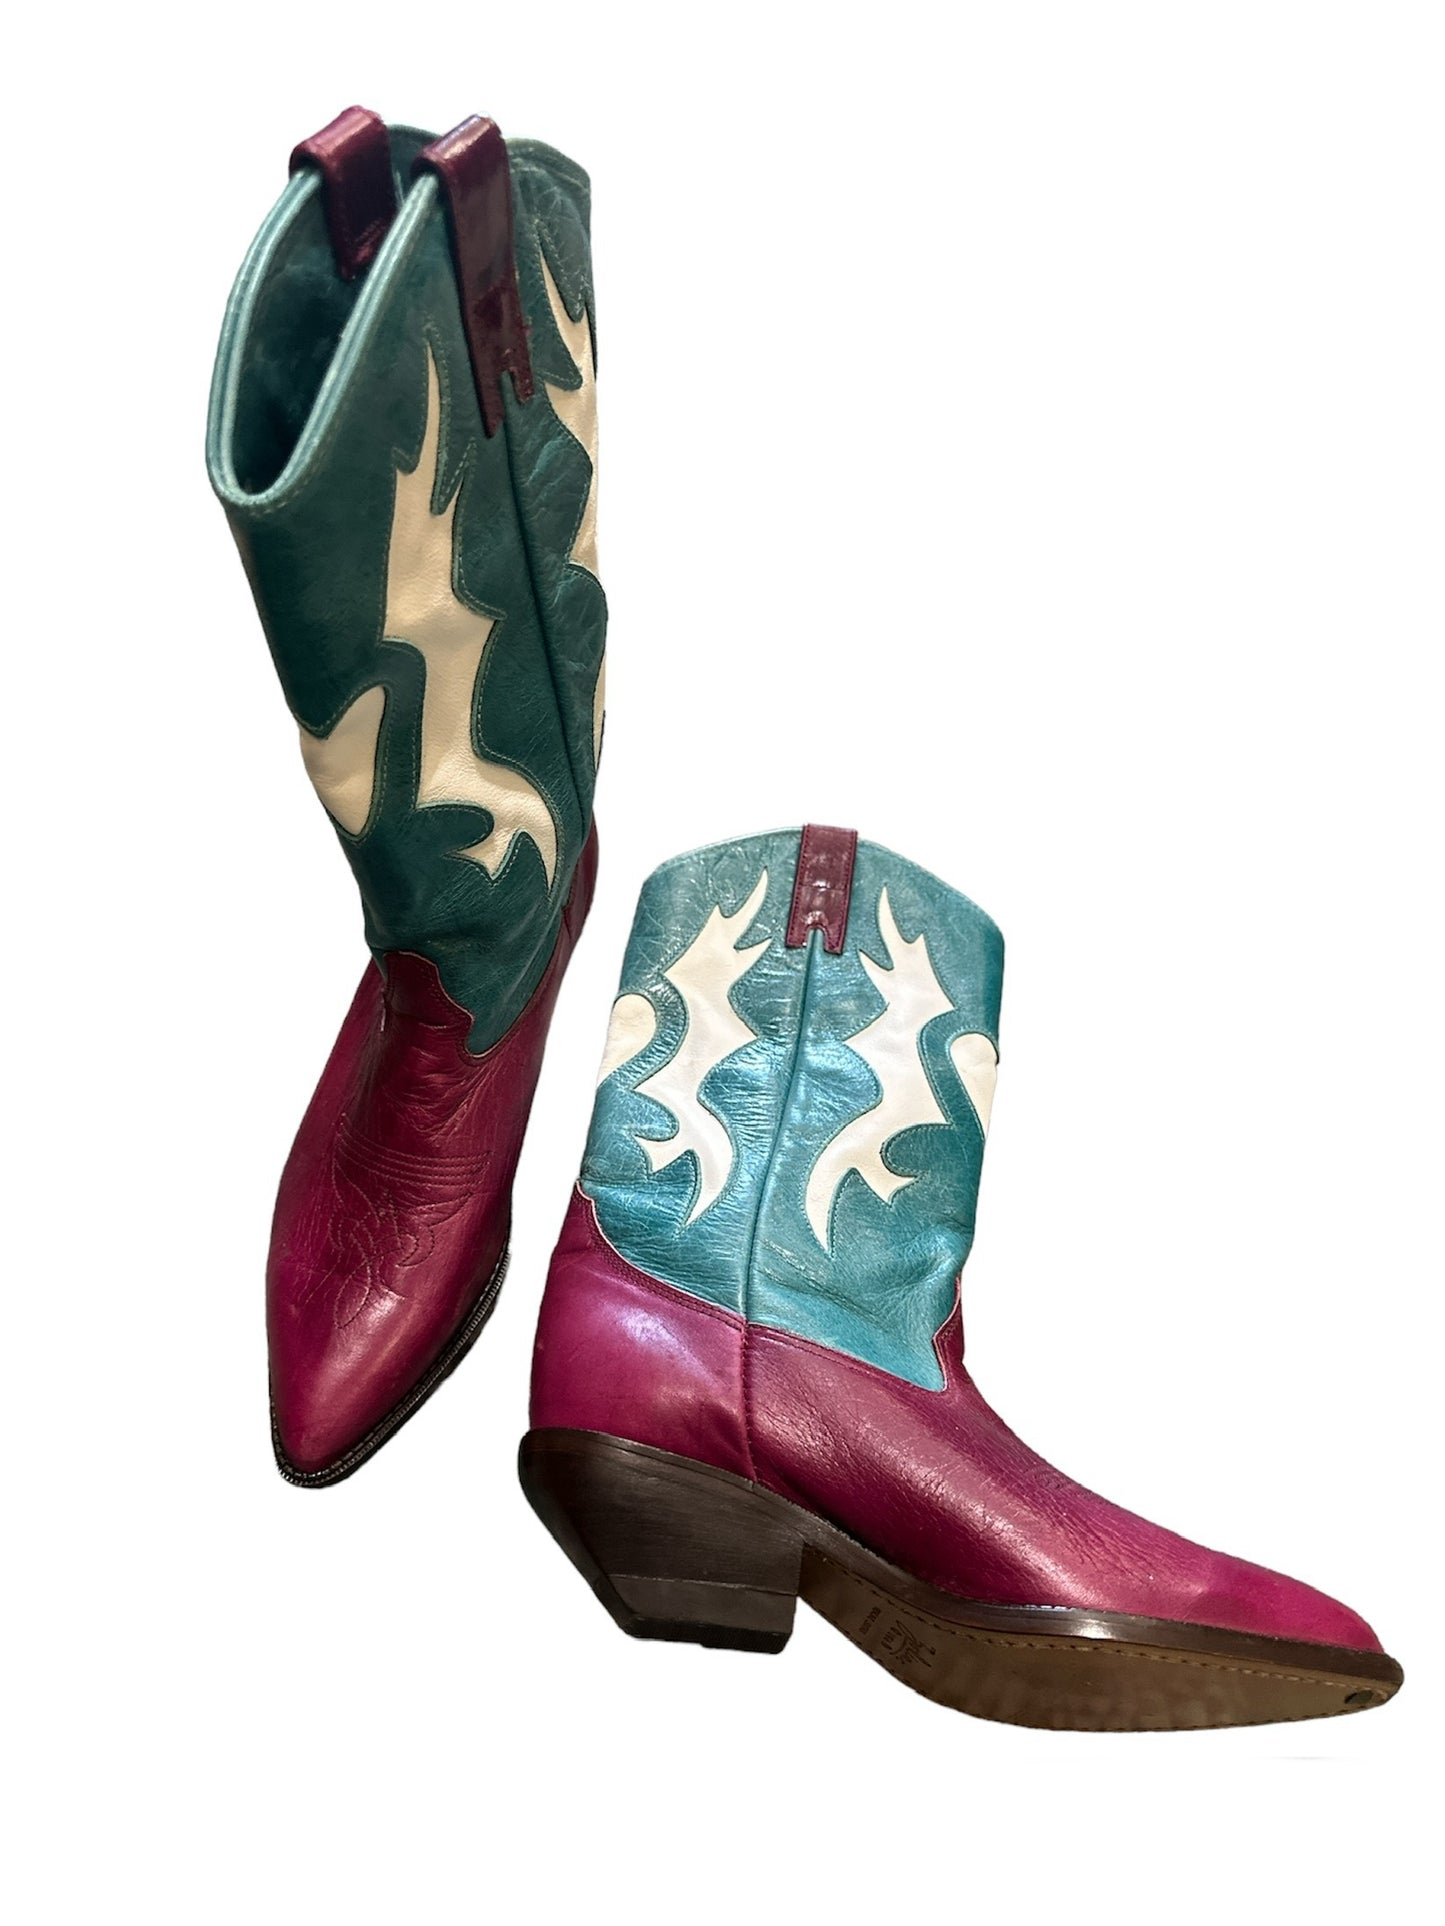 Vintage Zodiac cowboy boots 6.5